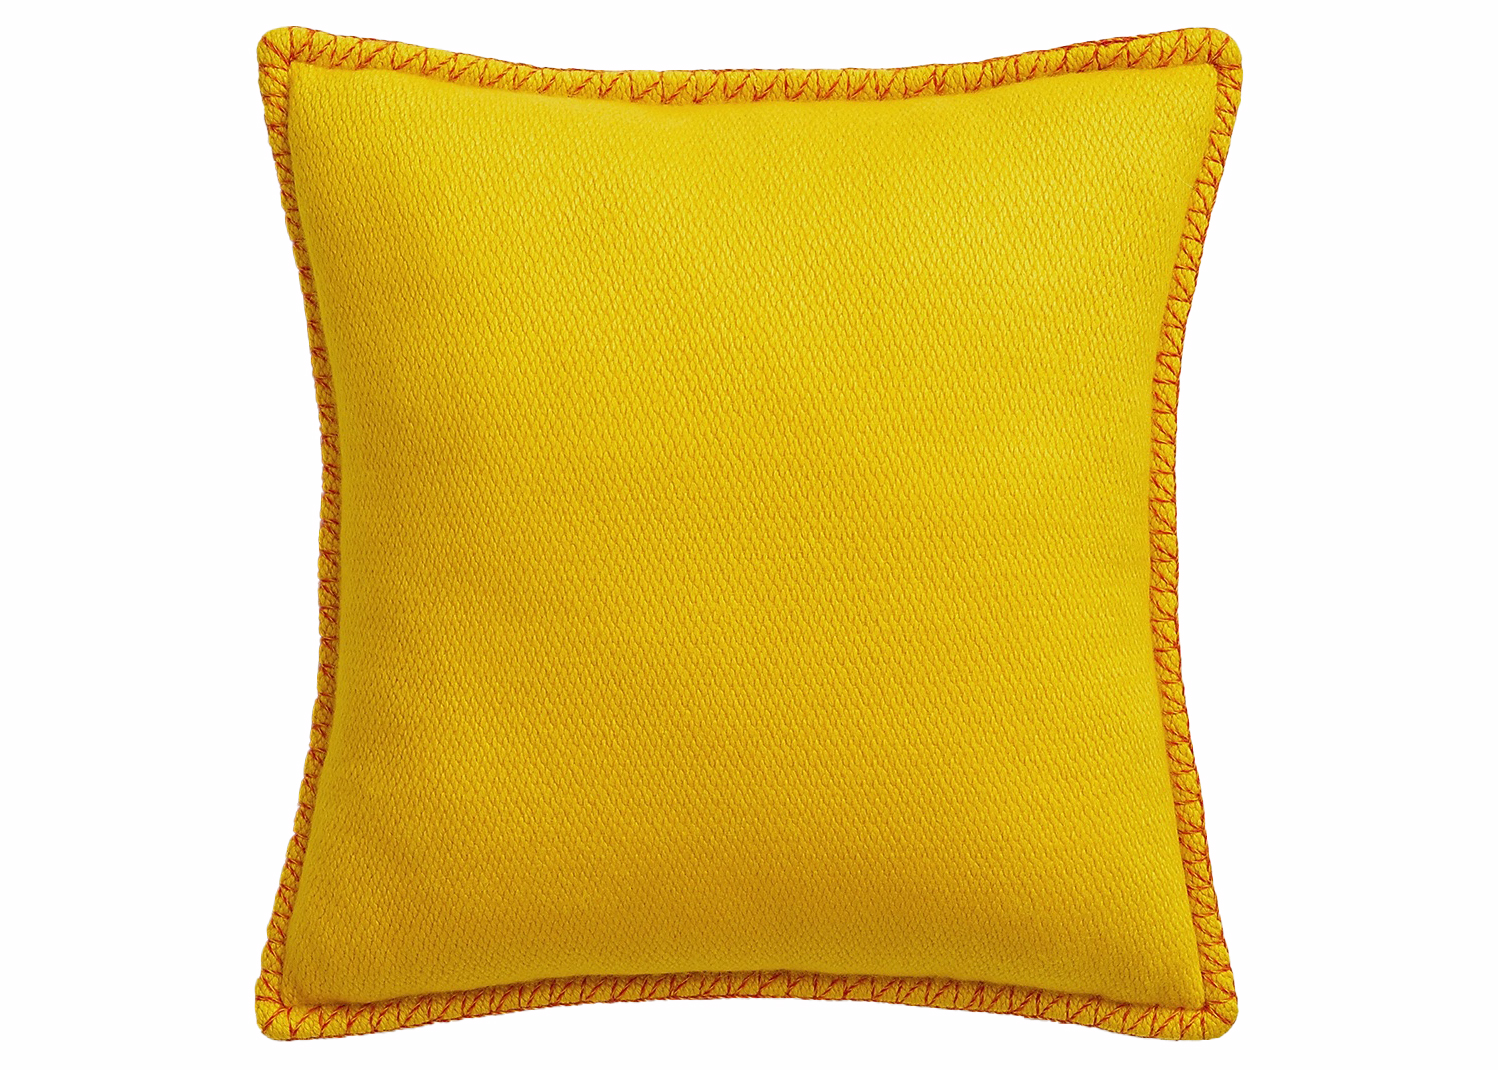 Hermes Avalon Tangram Pillow Coquelicot/Terracotta in 100